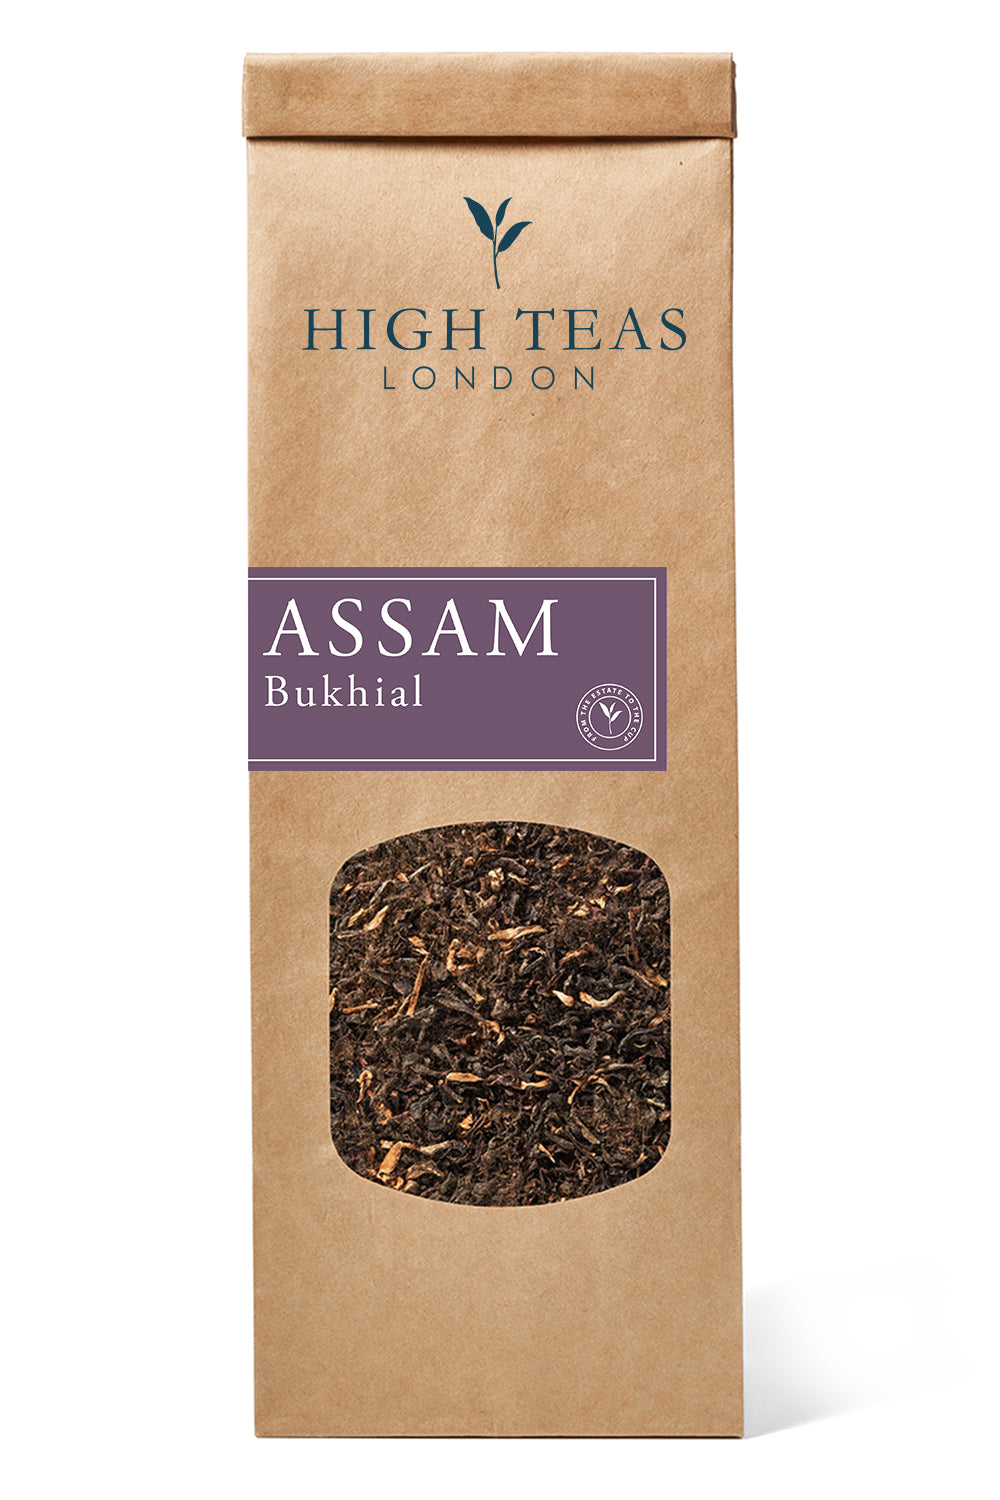 Assam Bukhial-50g-Loose Leaf Tea-High Teas